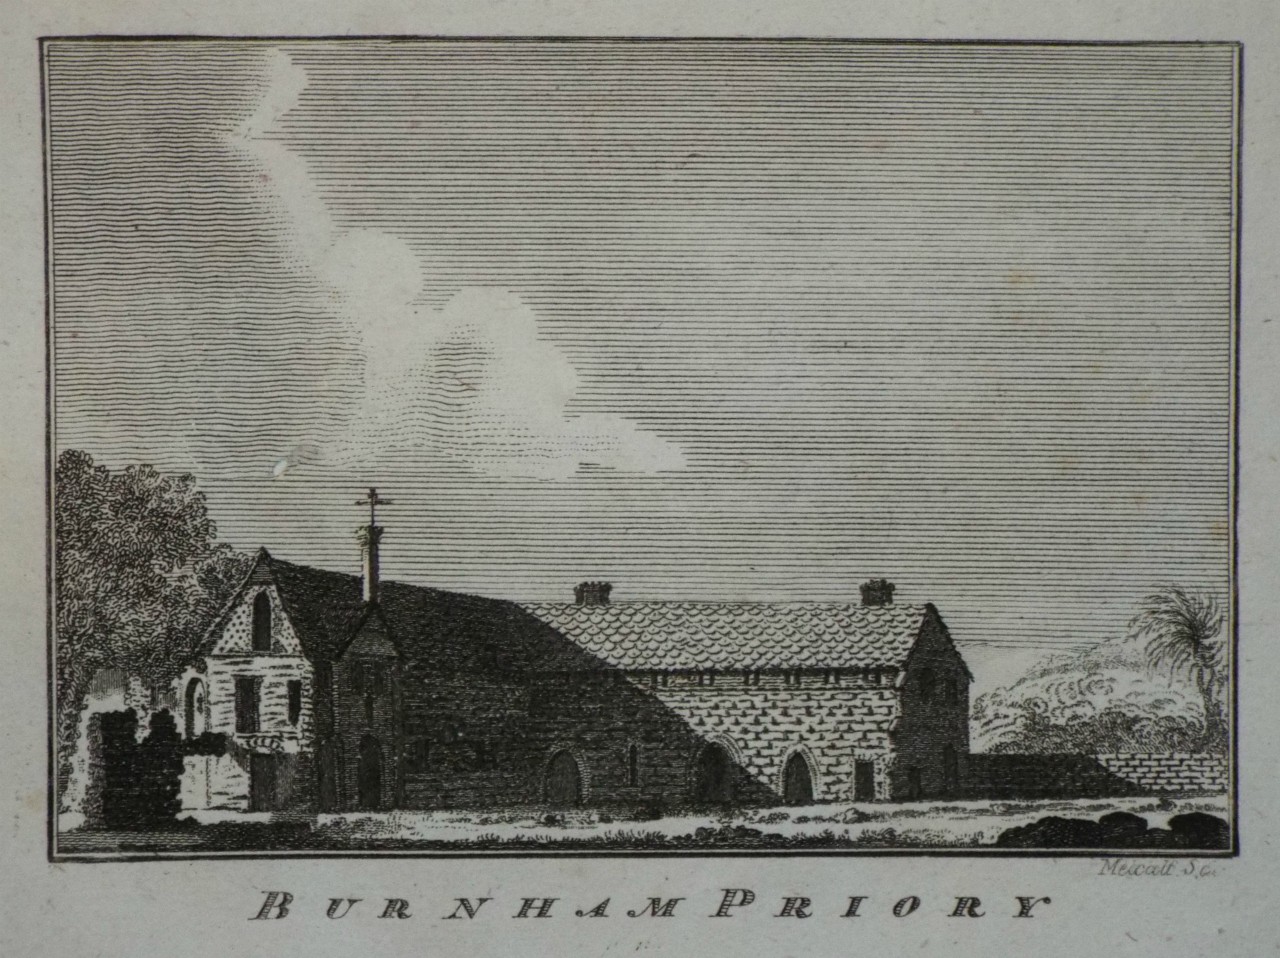 Print - Burnham Priory - 